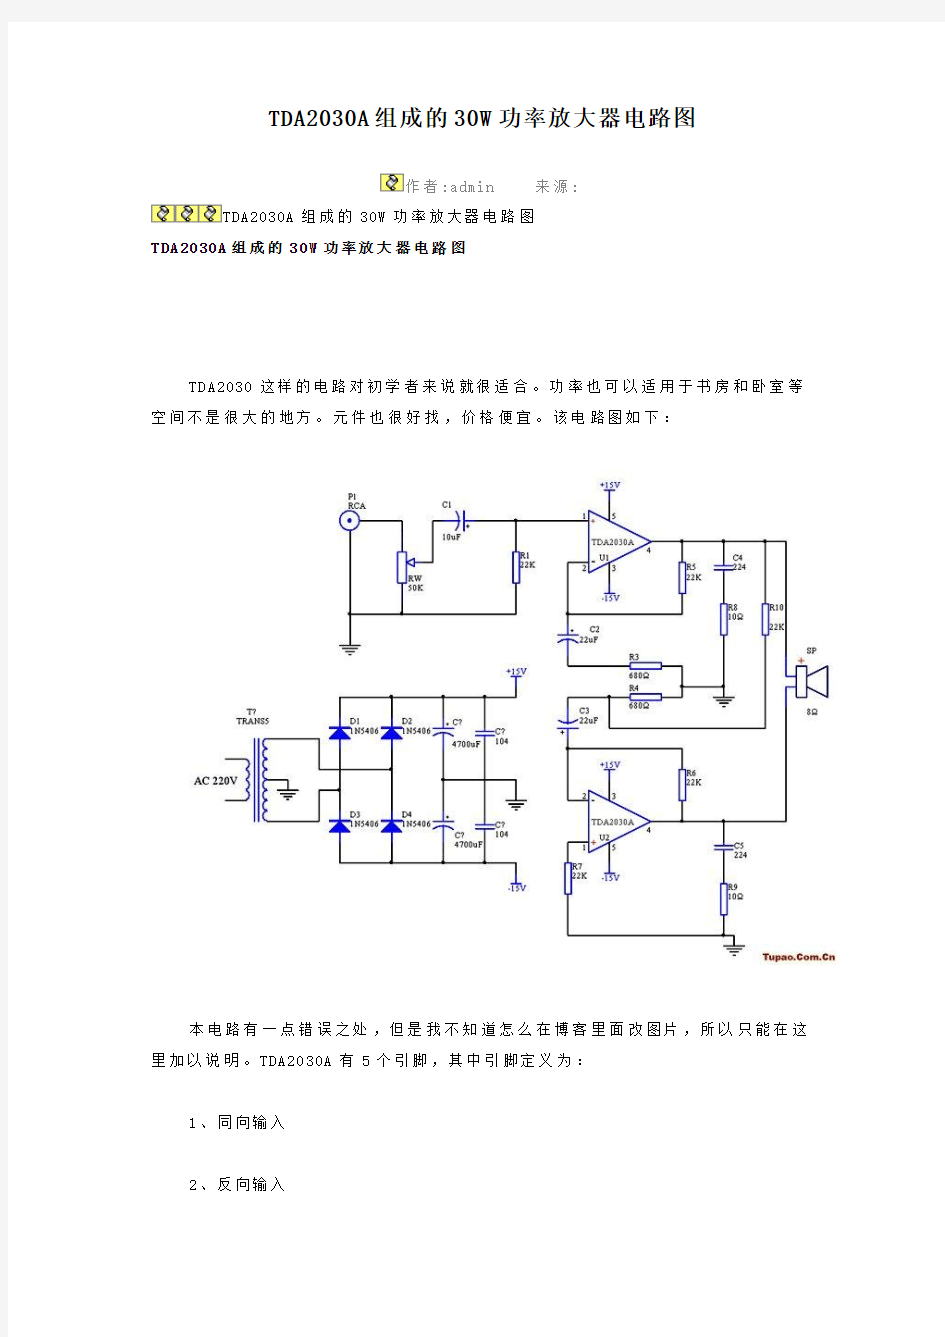 TDA2030A组成的30W功率放大器电路图